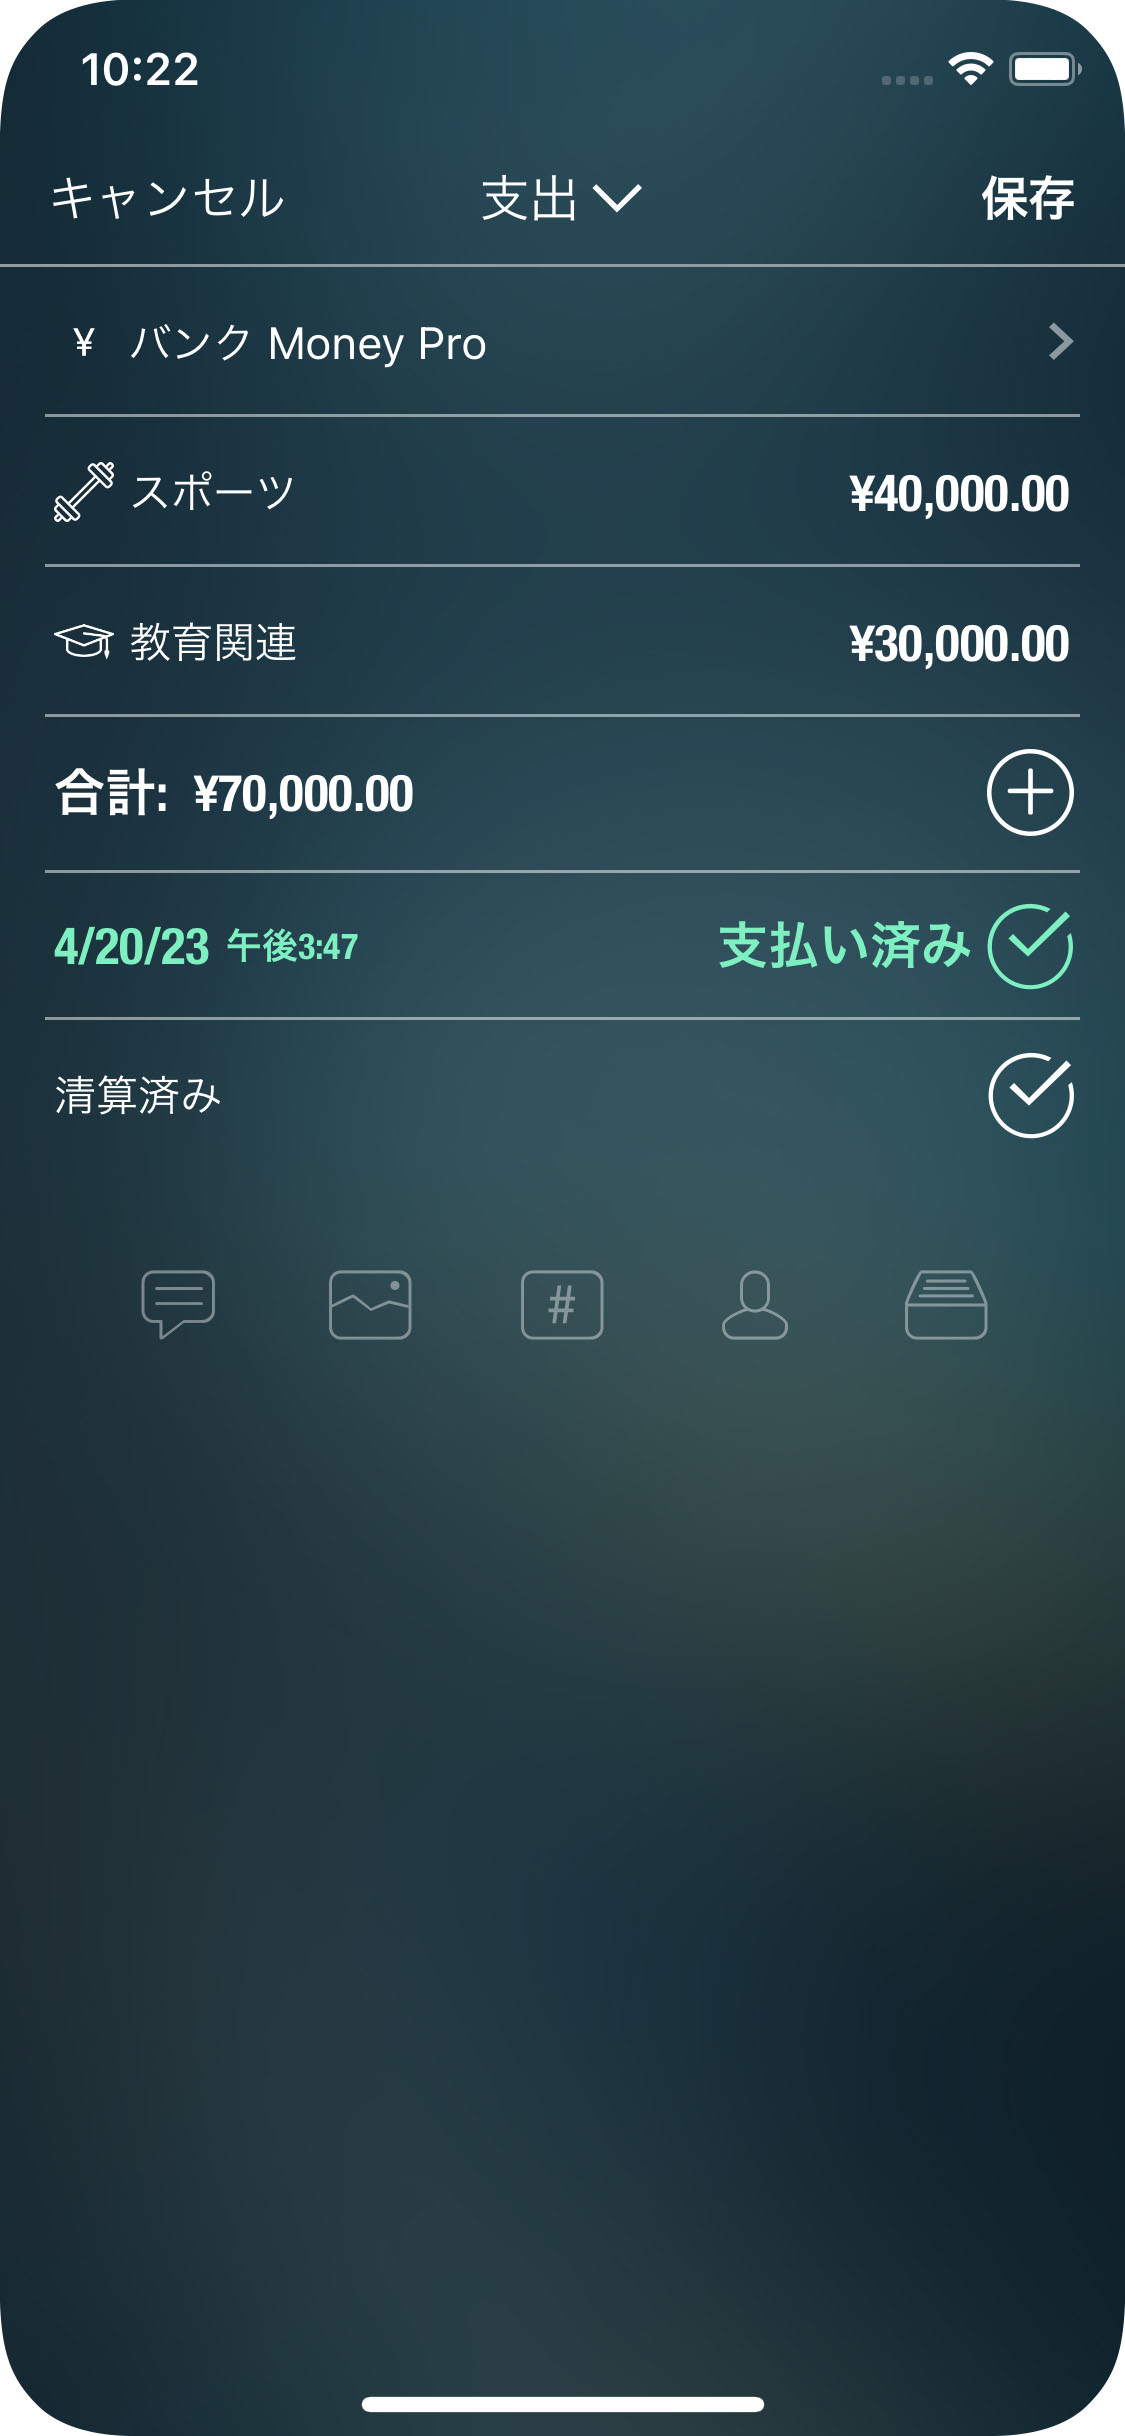 Money Pro - 取引の作成 - iPhone